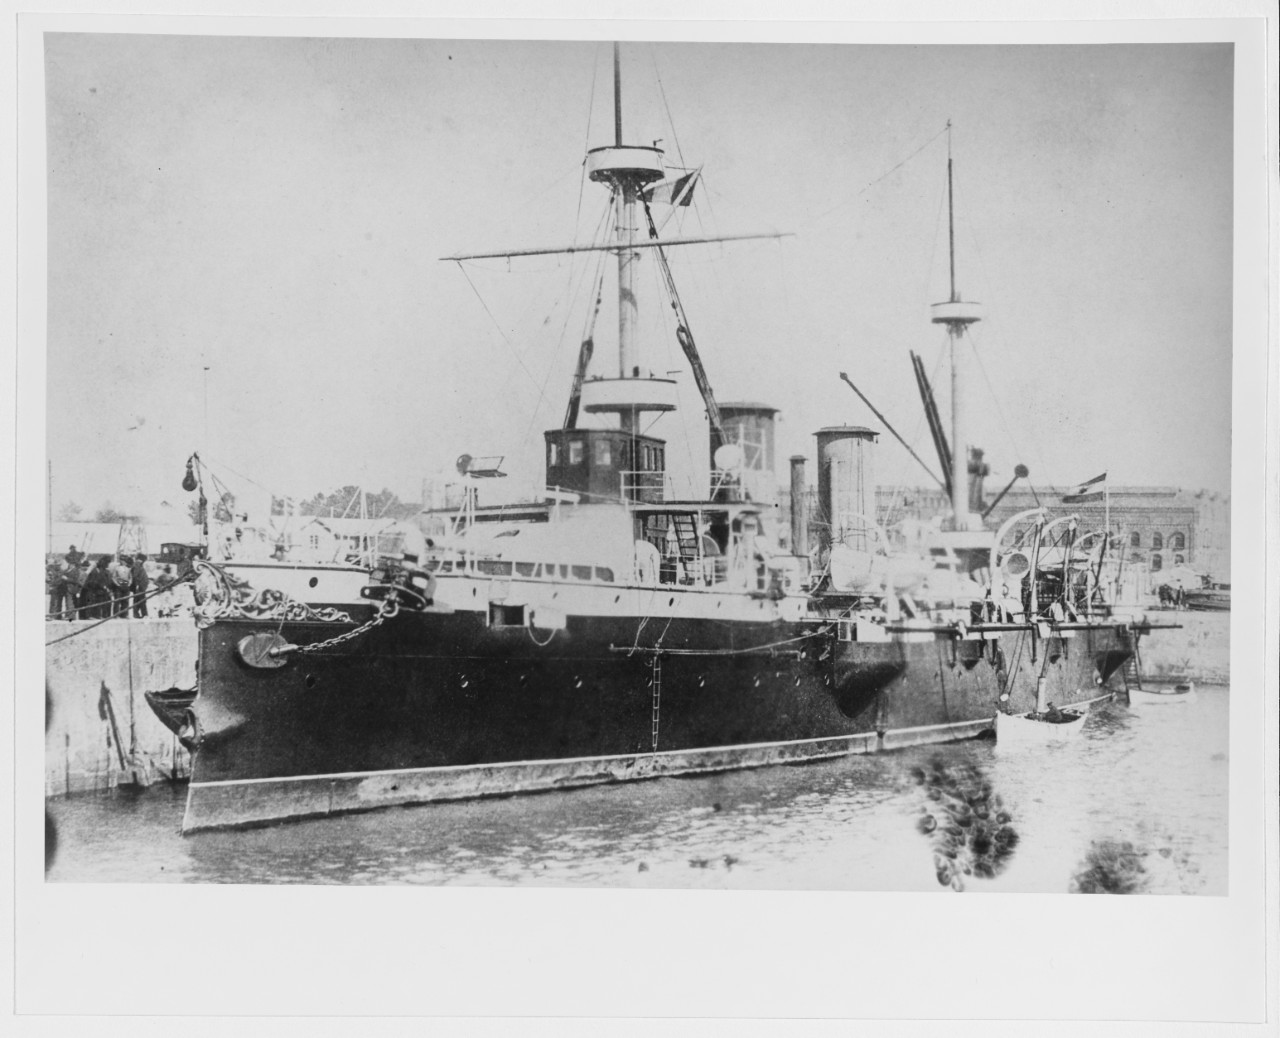 VEINTICINCO DE MAYO (Argentine protected cruiser, 1890-1916)